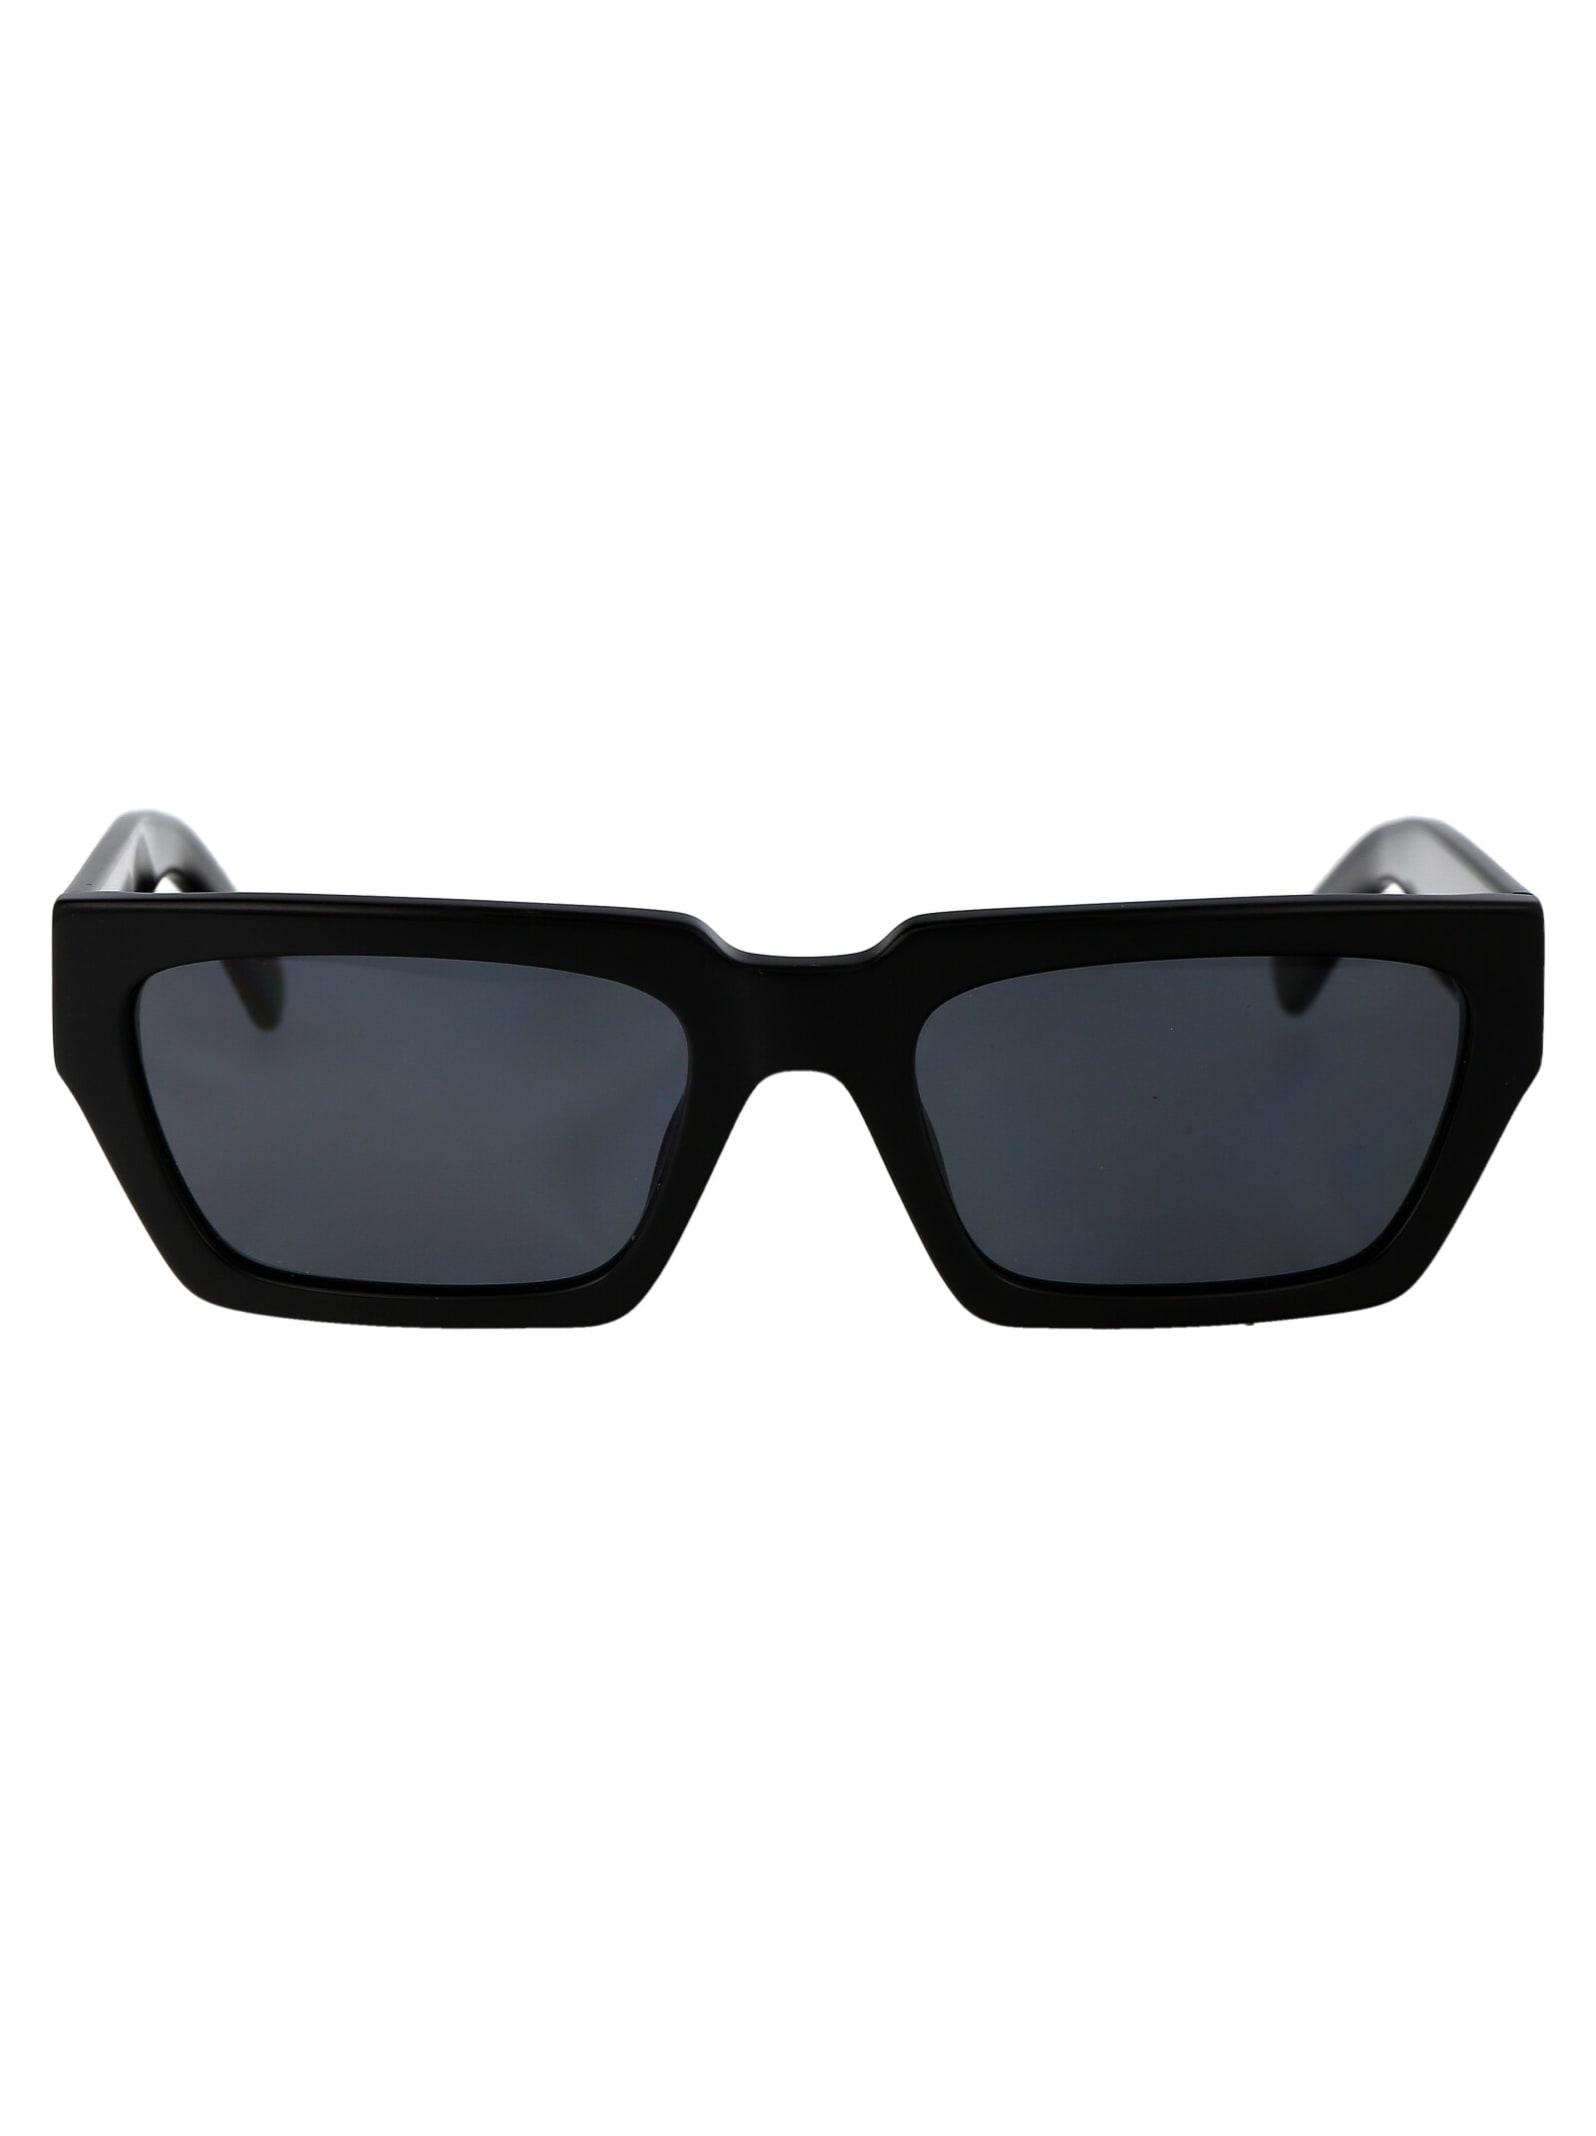 Mos166/s Sunglasses